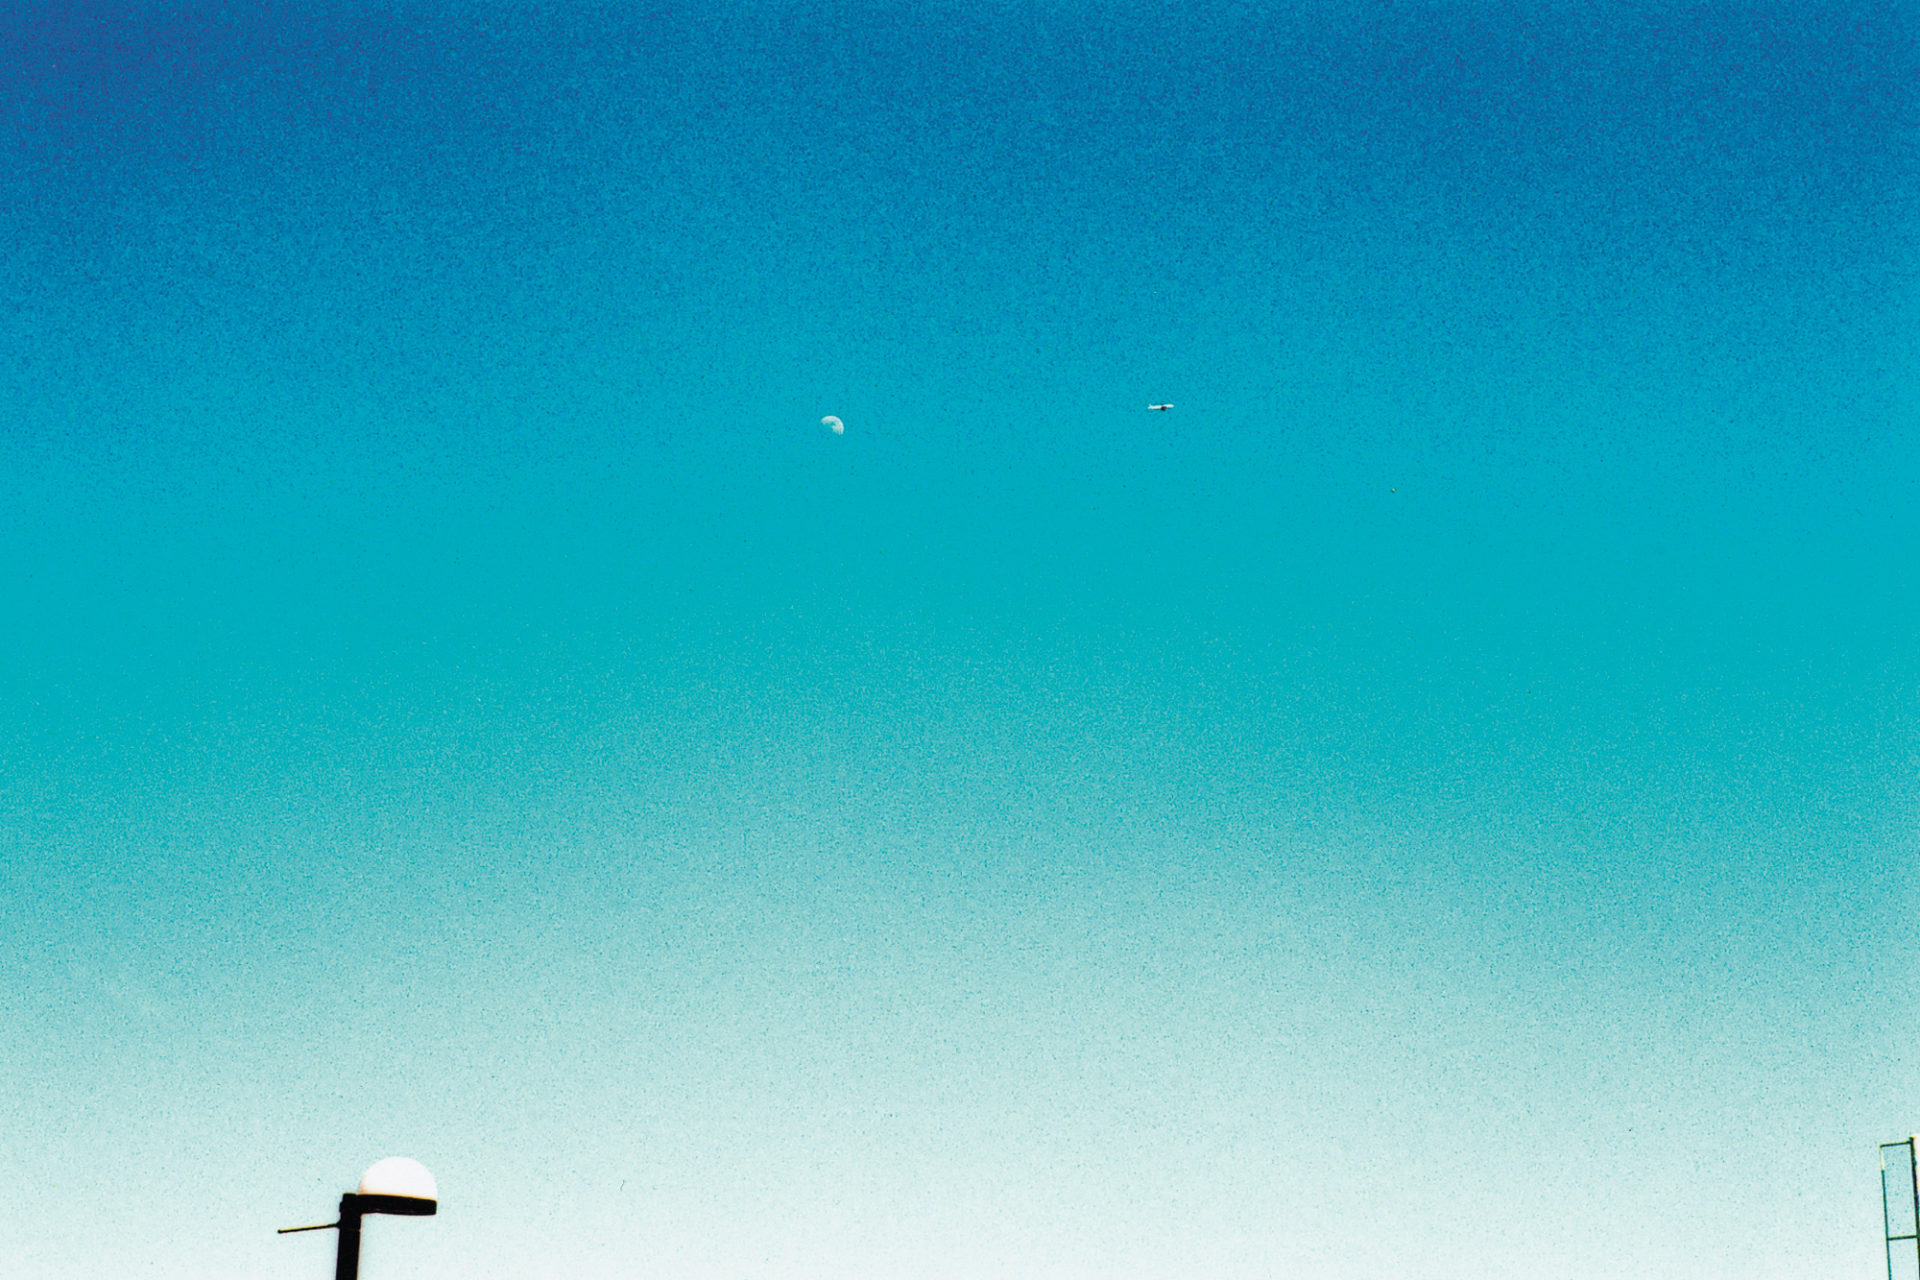 Moon, plane, balloon, Coney Island.